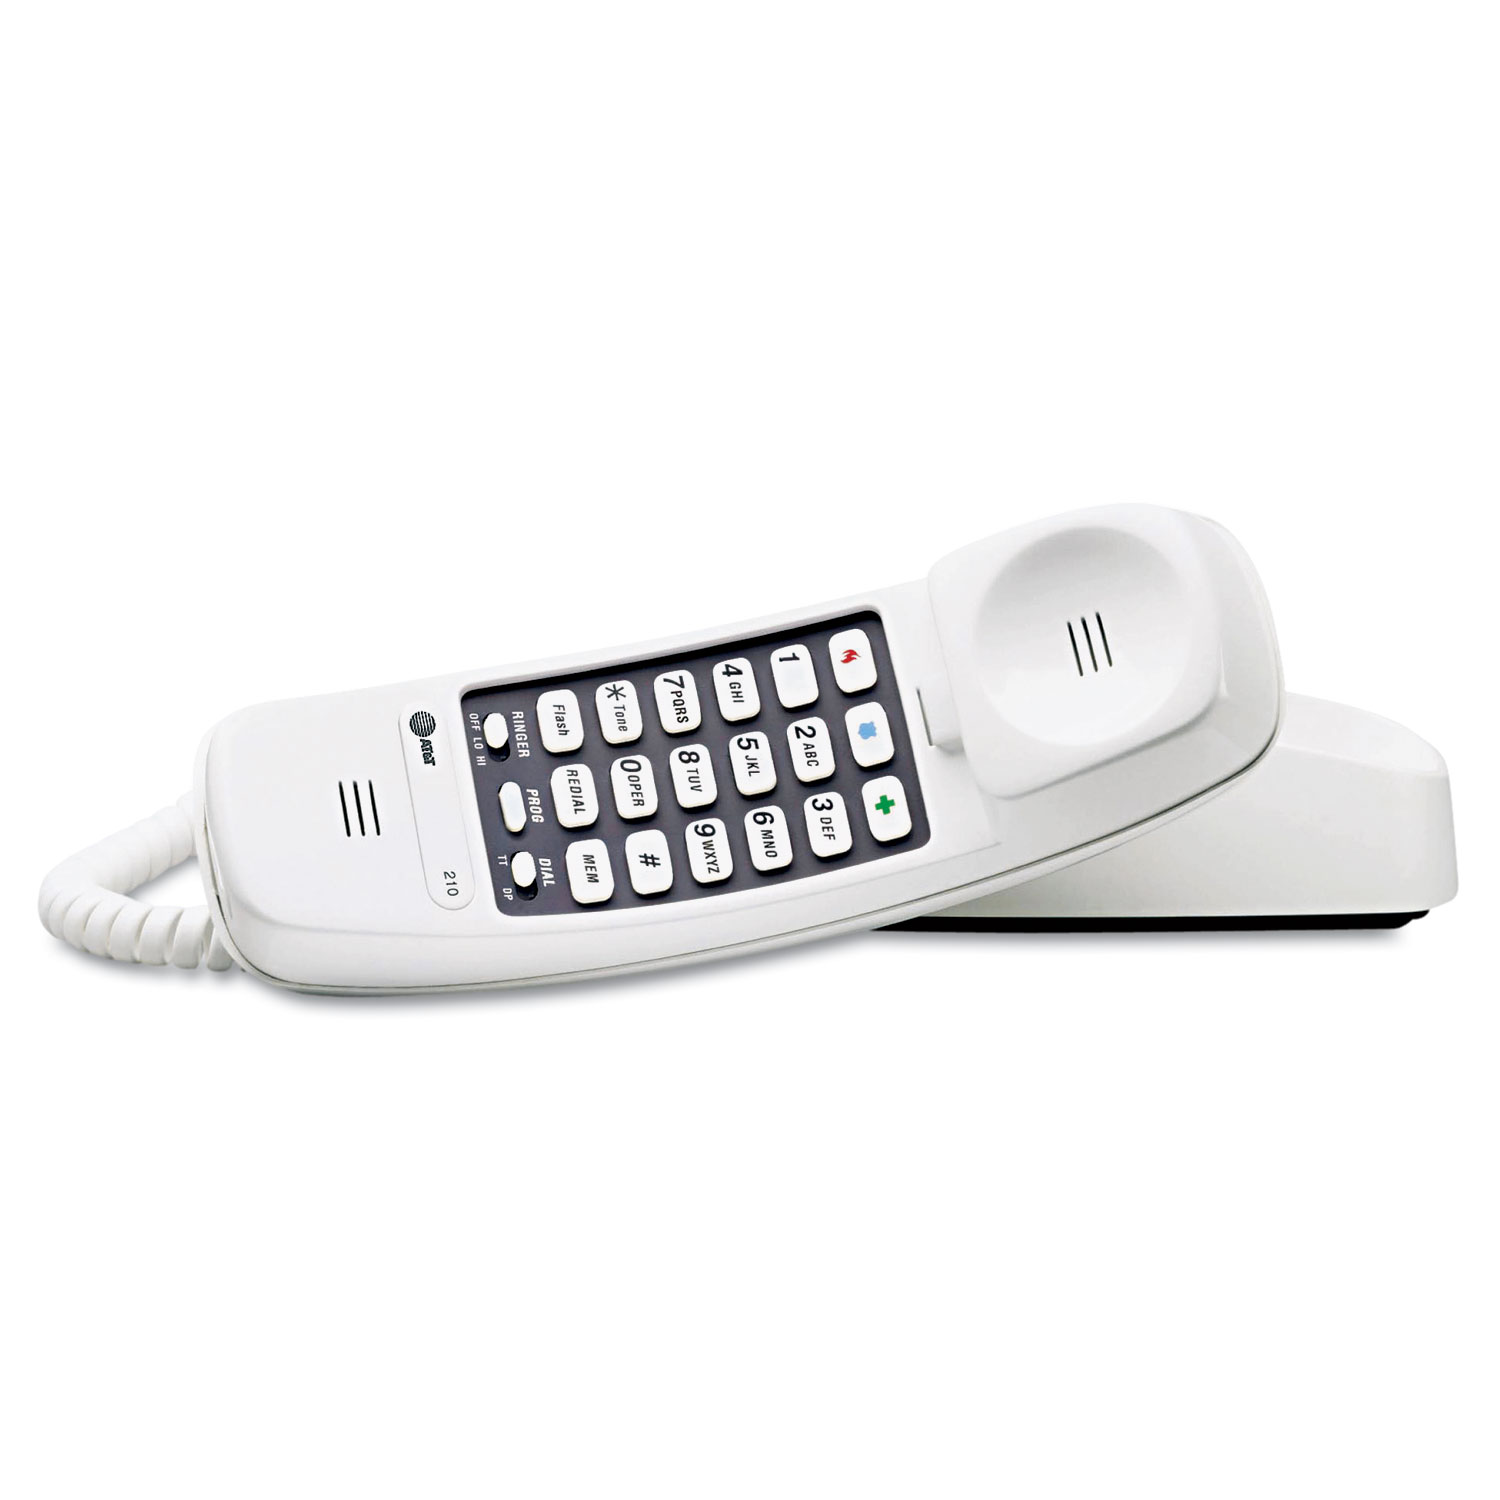  AT&T 210W 210 Trimline Telephone, White (ATT210W) 